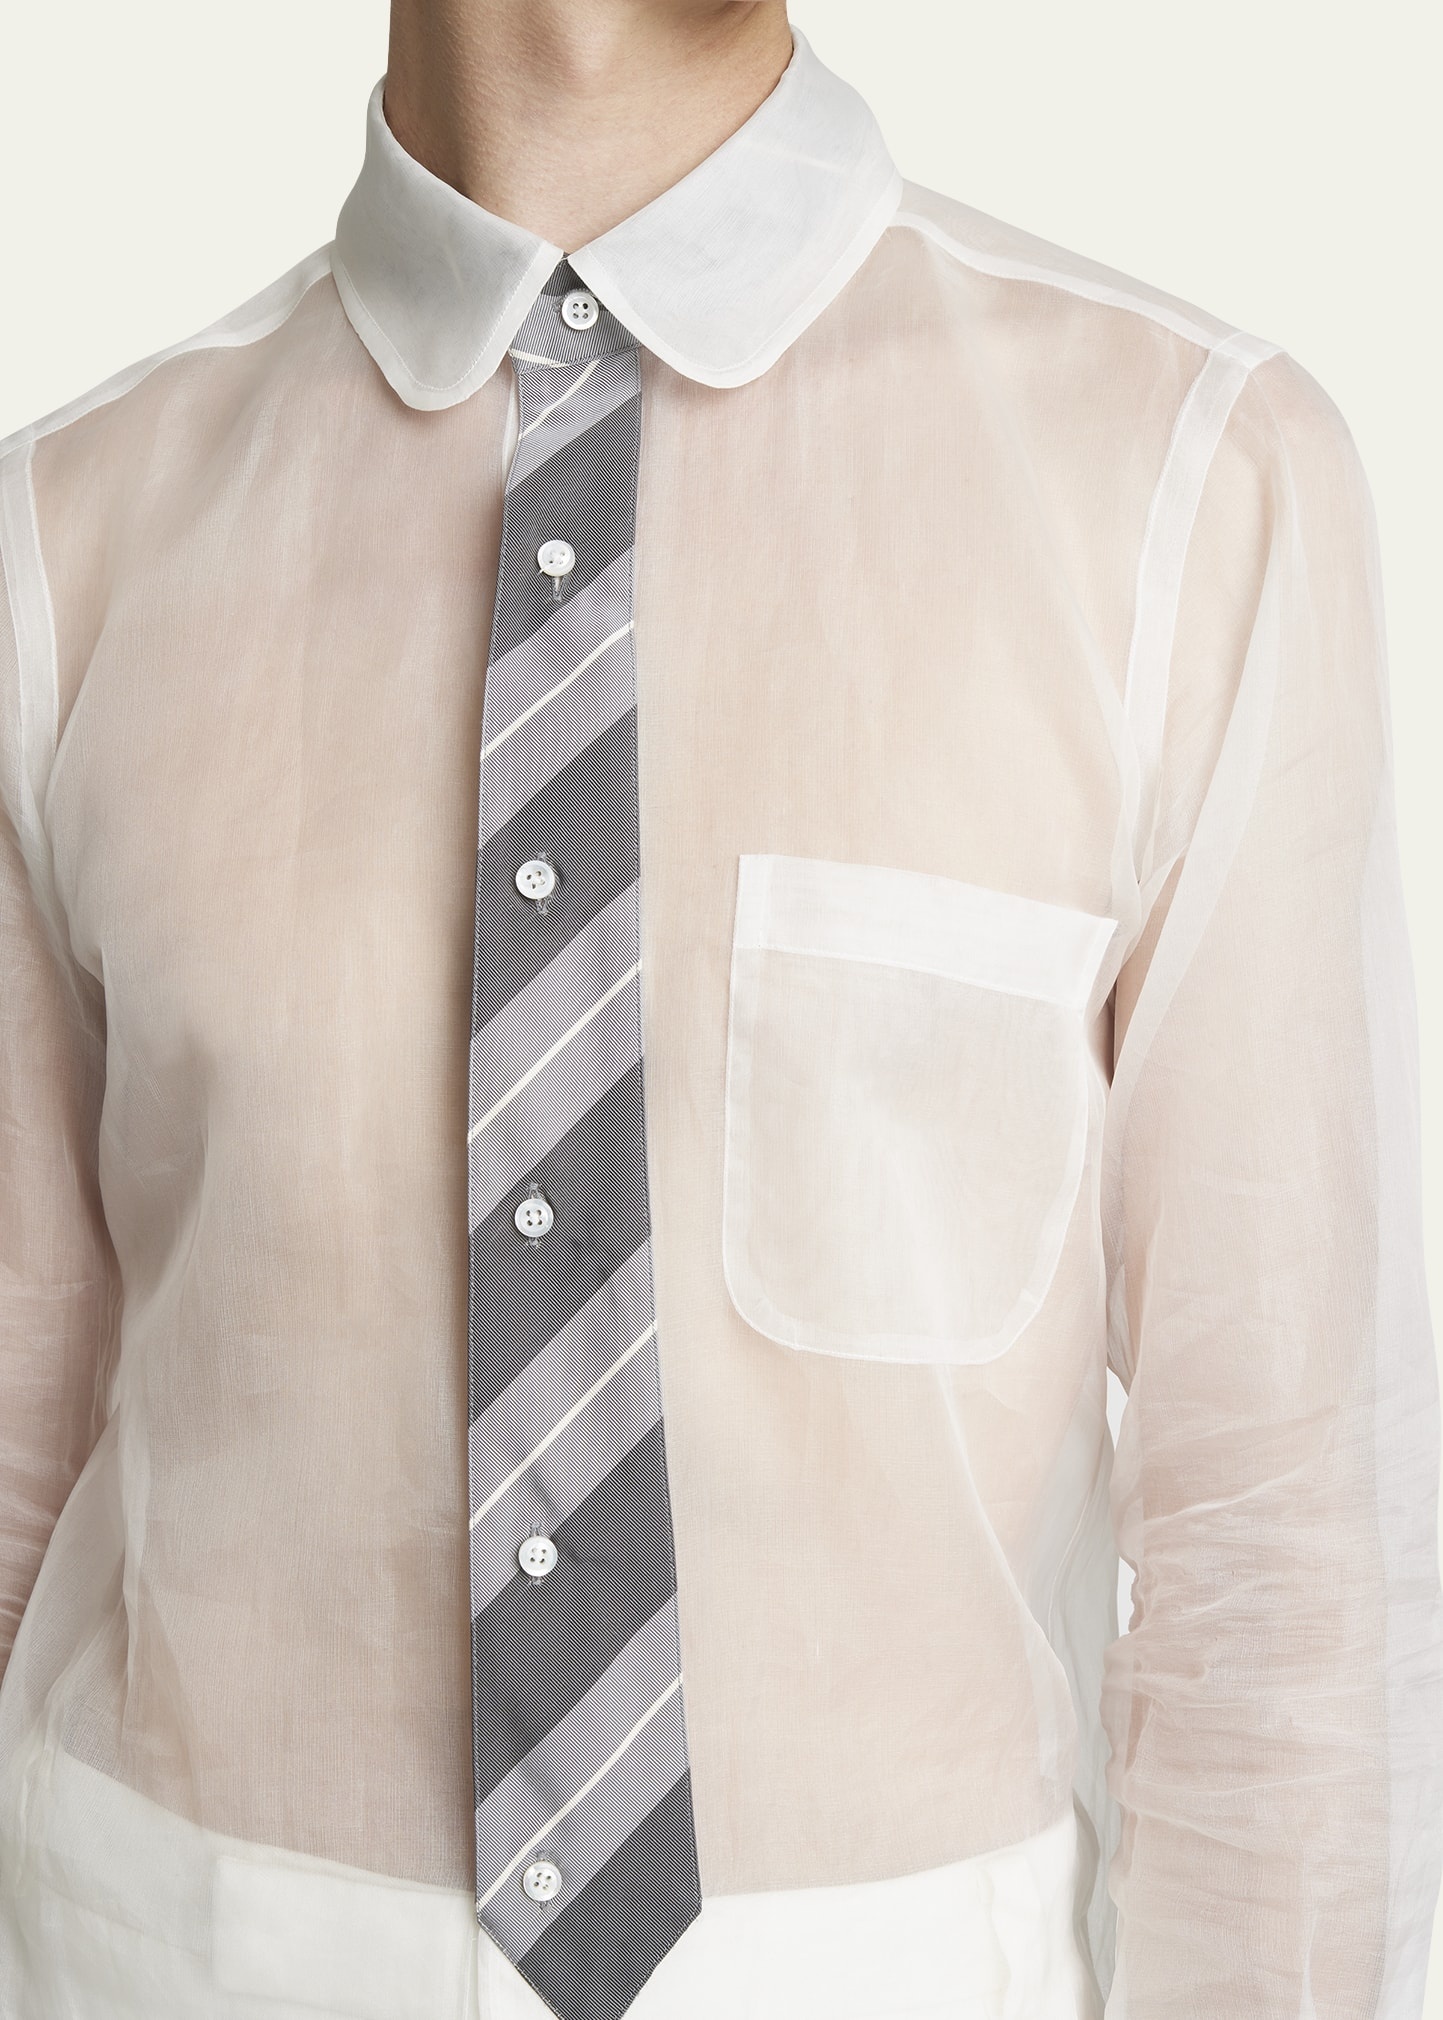 Men's Sheer Organza Shirt with Tie Print - 5